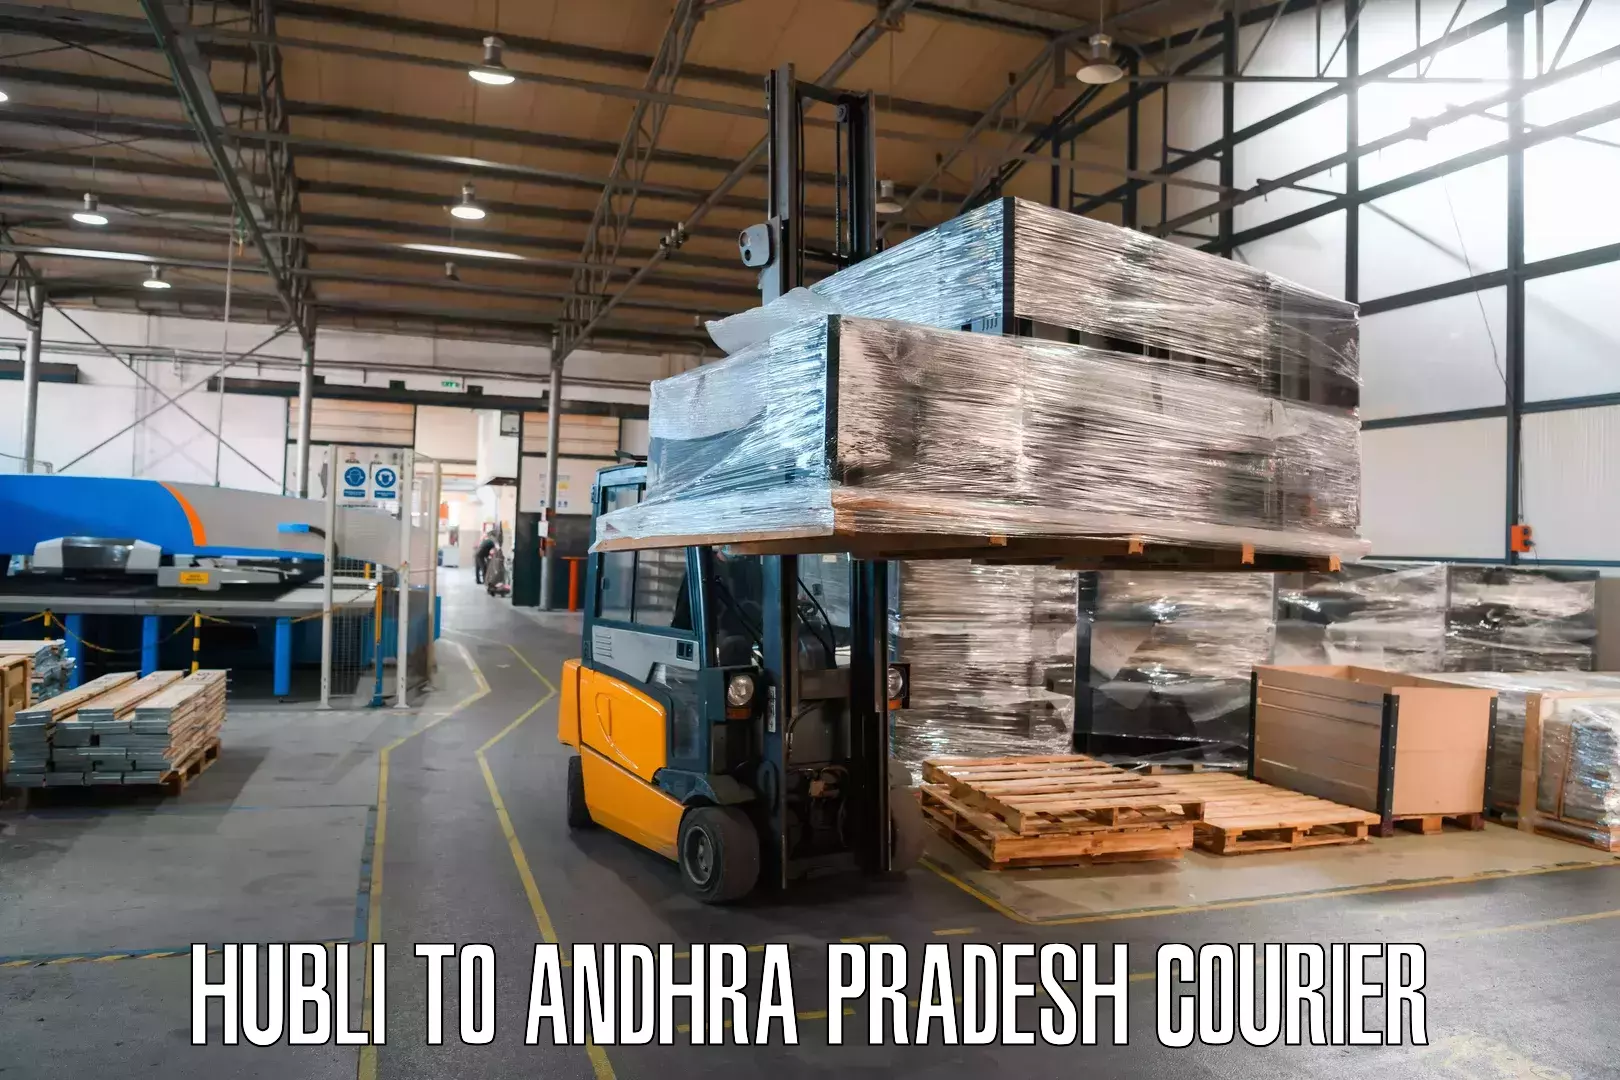 User-friendly courier app Hubli to Andhra Pradesh